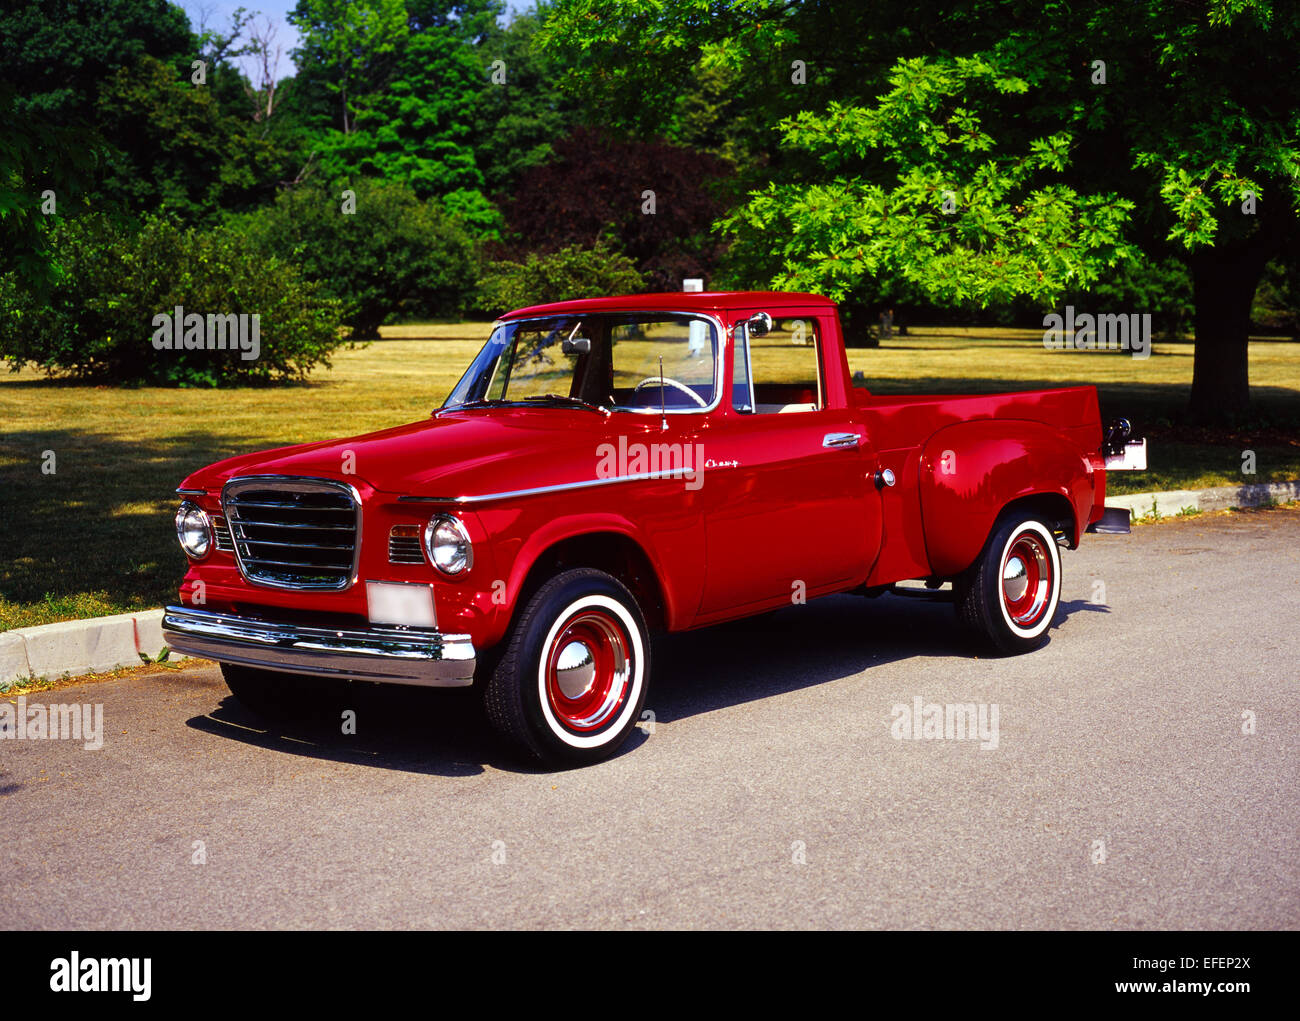 1962 Studebaker Champ camioneta Pick Up Fotografía de stock - Alamy